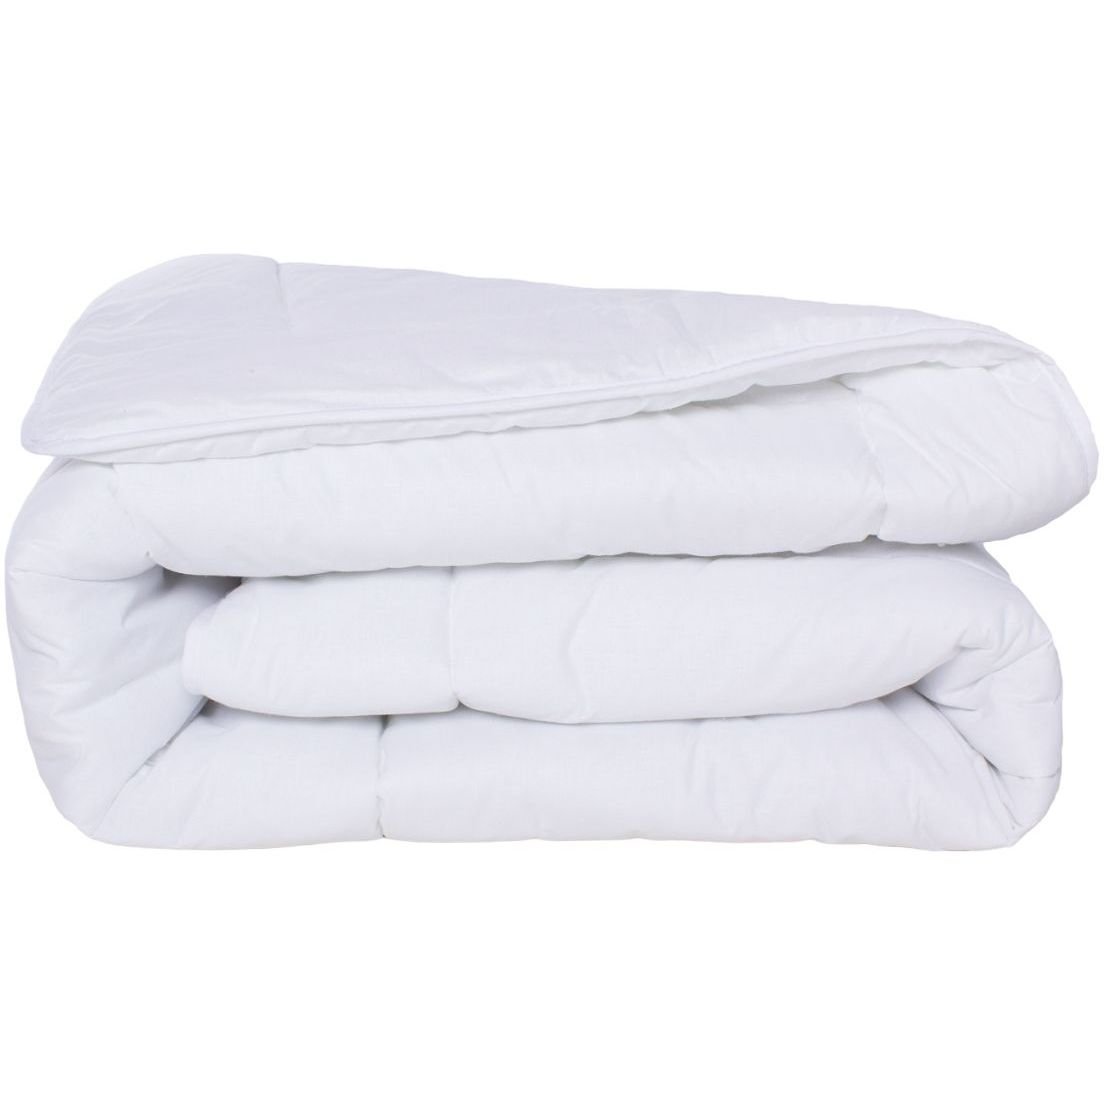 Одеяло шерстяное MirSon Bianco Экстра Премиум №0786, демисезонное, 155x215 см, белое - фото 1